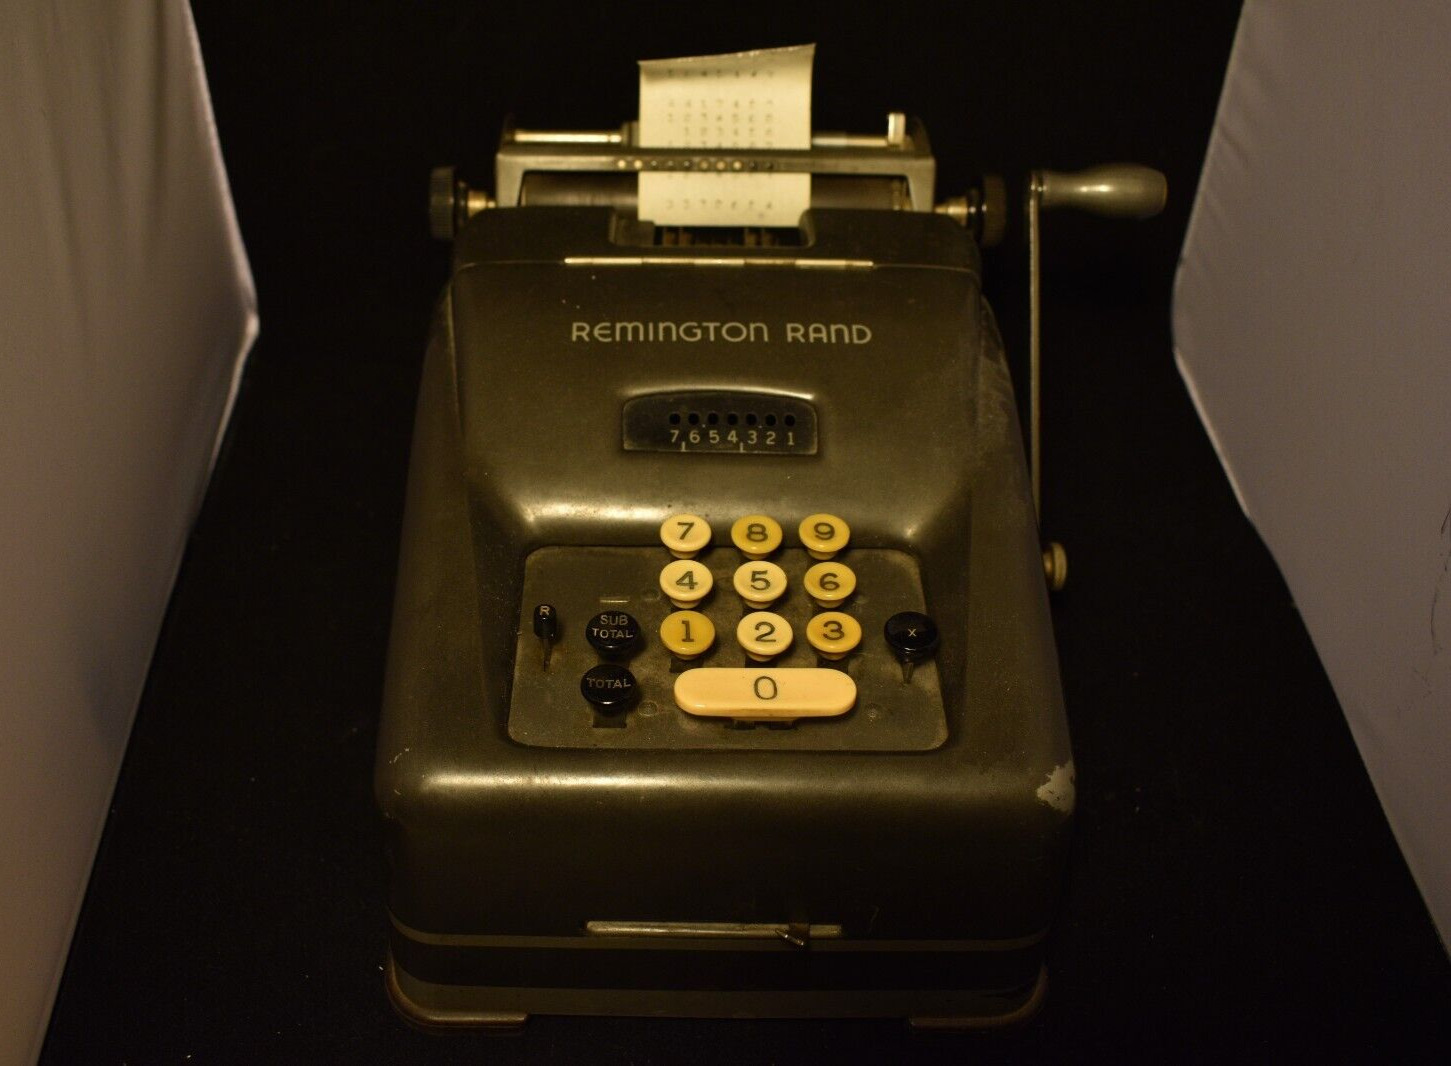 Vintage 1940s Remington Rand Adding/Calculating Machine Working w/ Paper & Ink